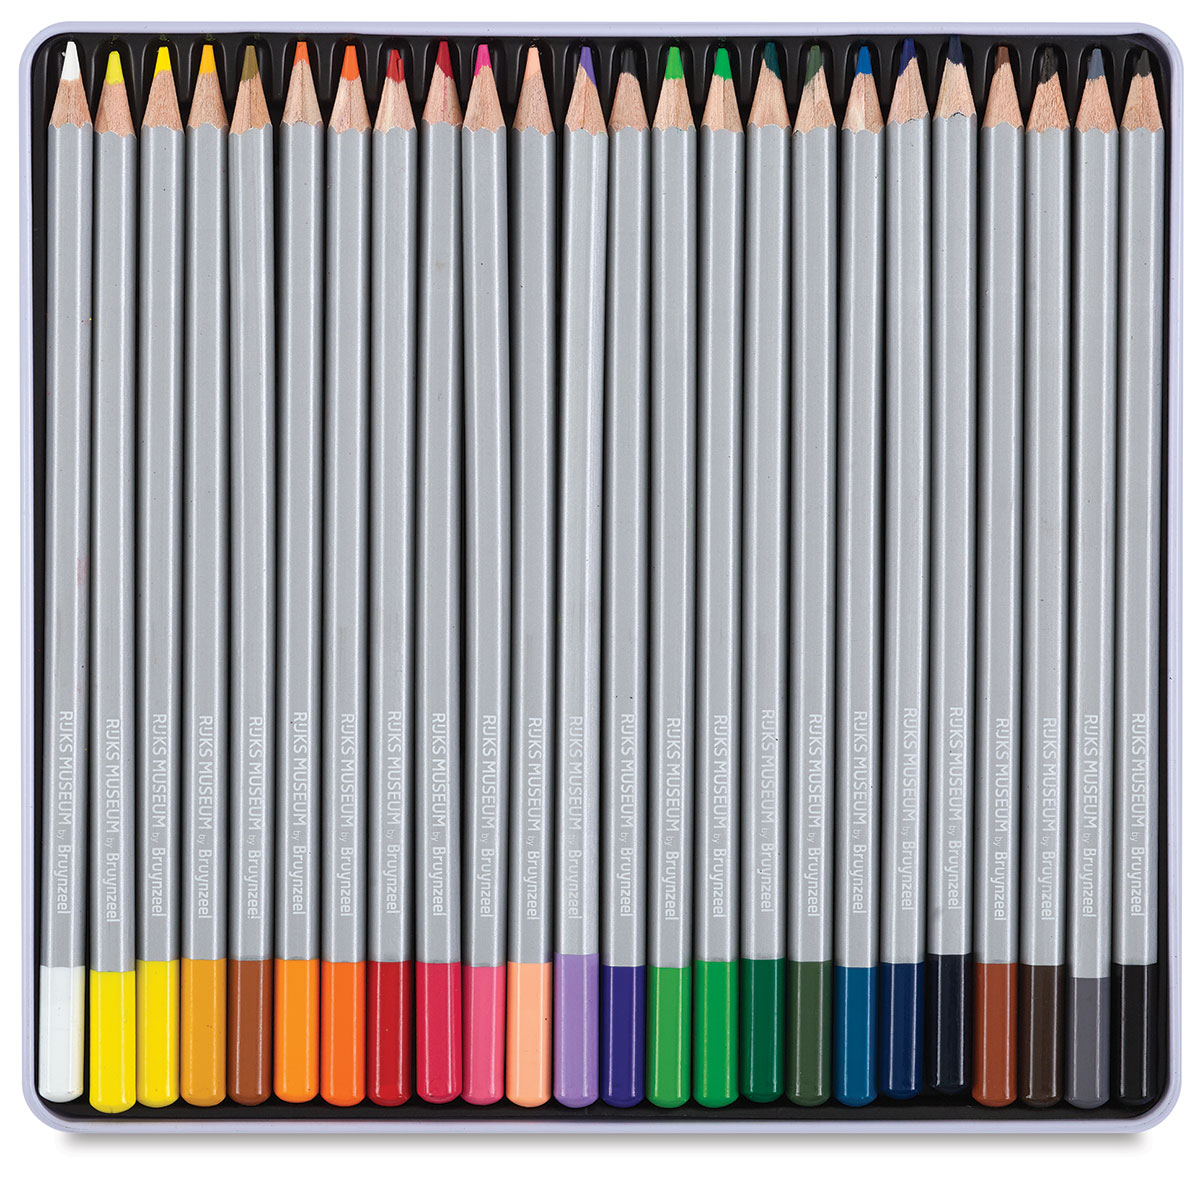 Bruynzeel Dutch Masters Colored Pencil Set 50-pack - 9587675